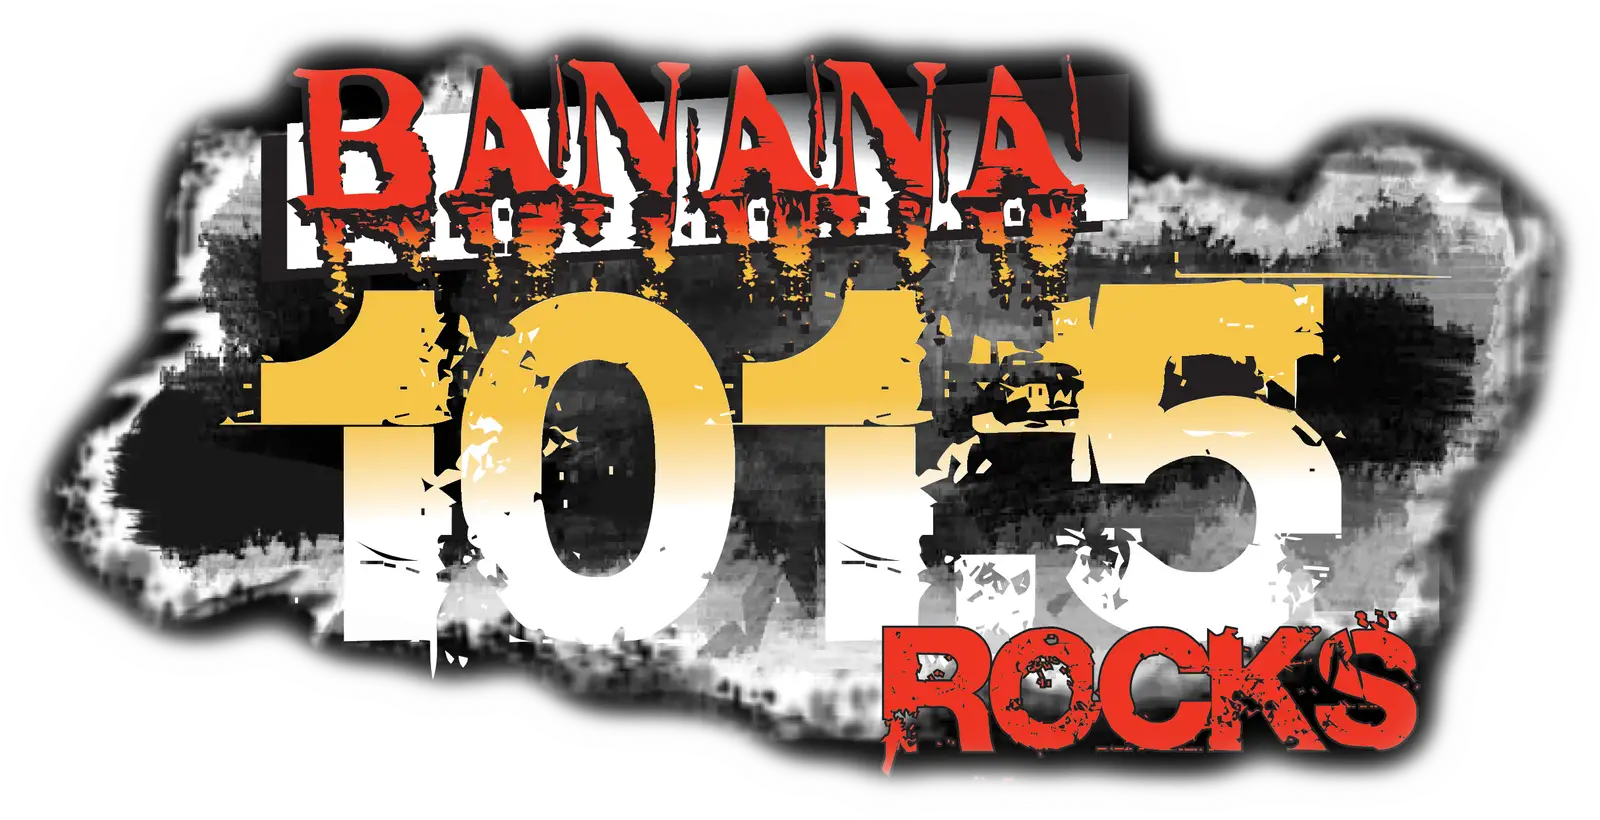 Banana 101.5 Flint's Rock Radio logo